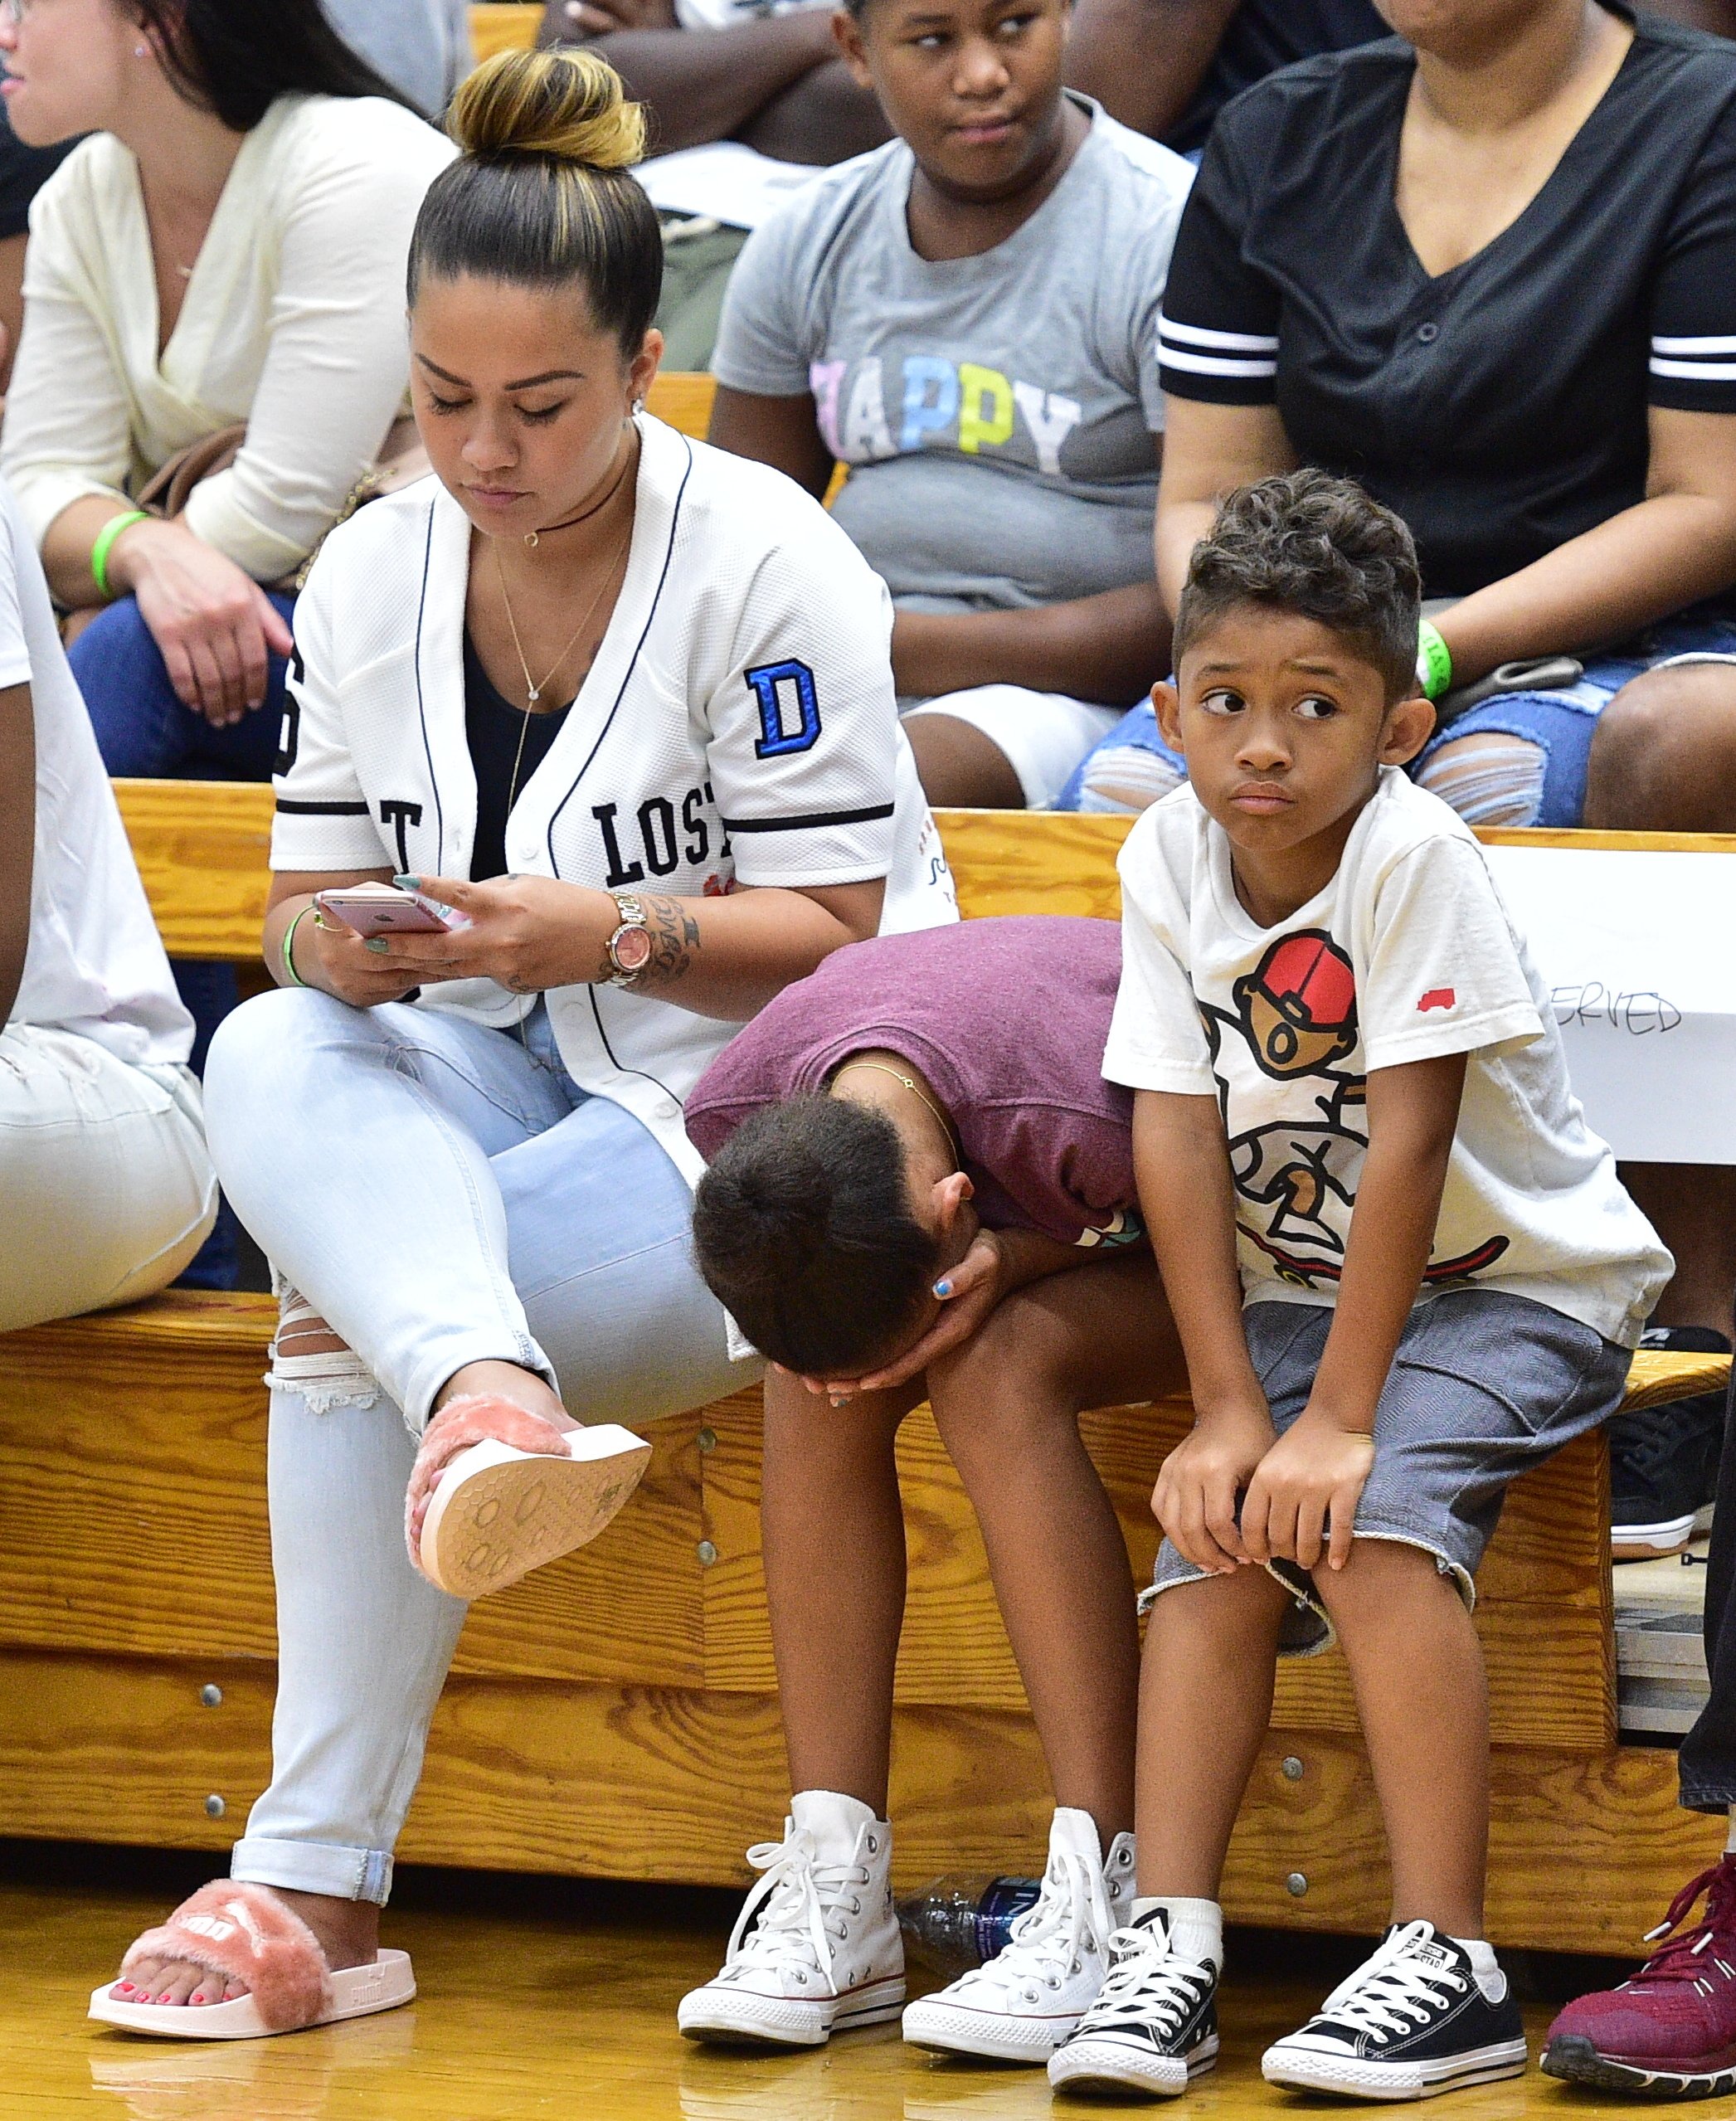 Sarah Vivan, Essence Vivan, and Dwayne Michael Carter III at the LudaDay Weekend Celebrity Basketball Game on September 4, 2016, in Atlanta | Source: Getty Images